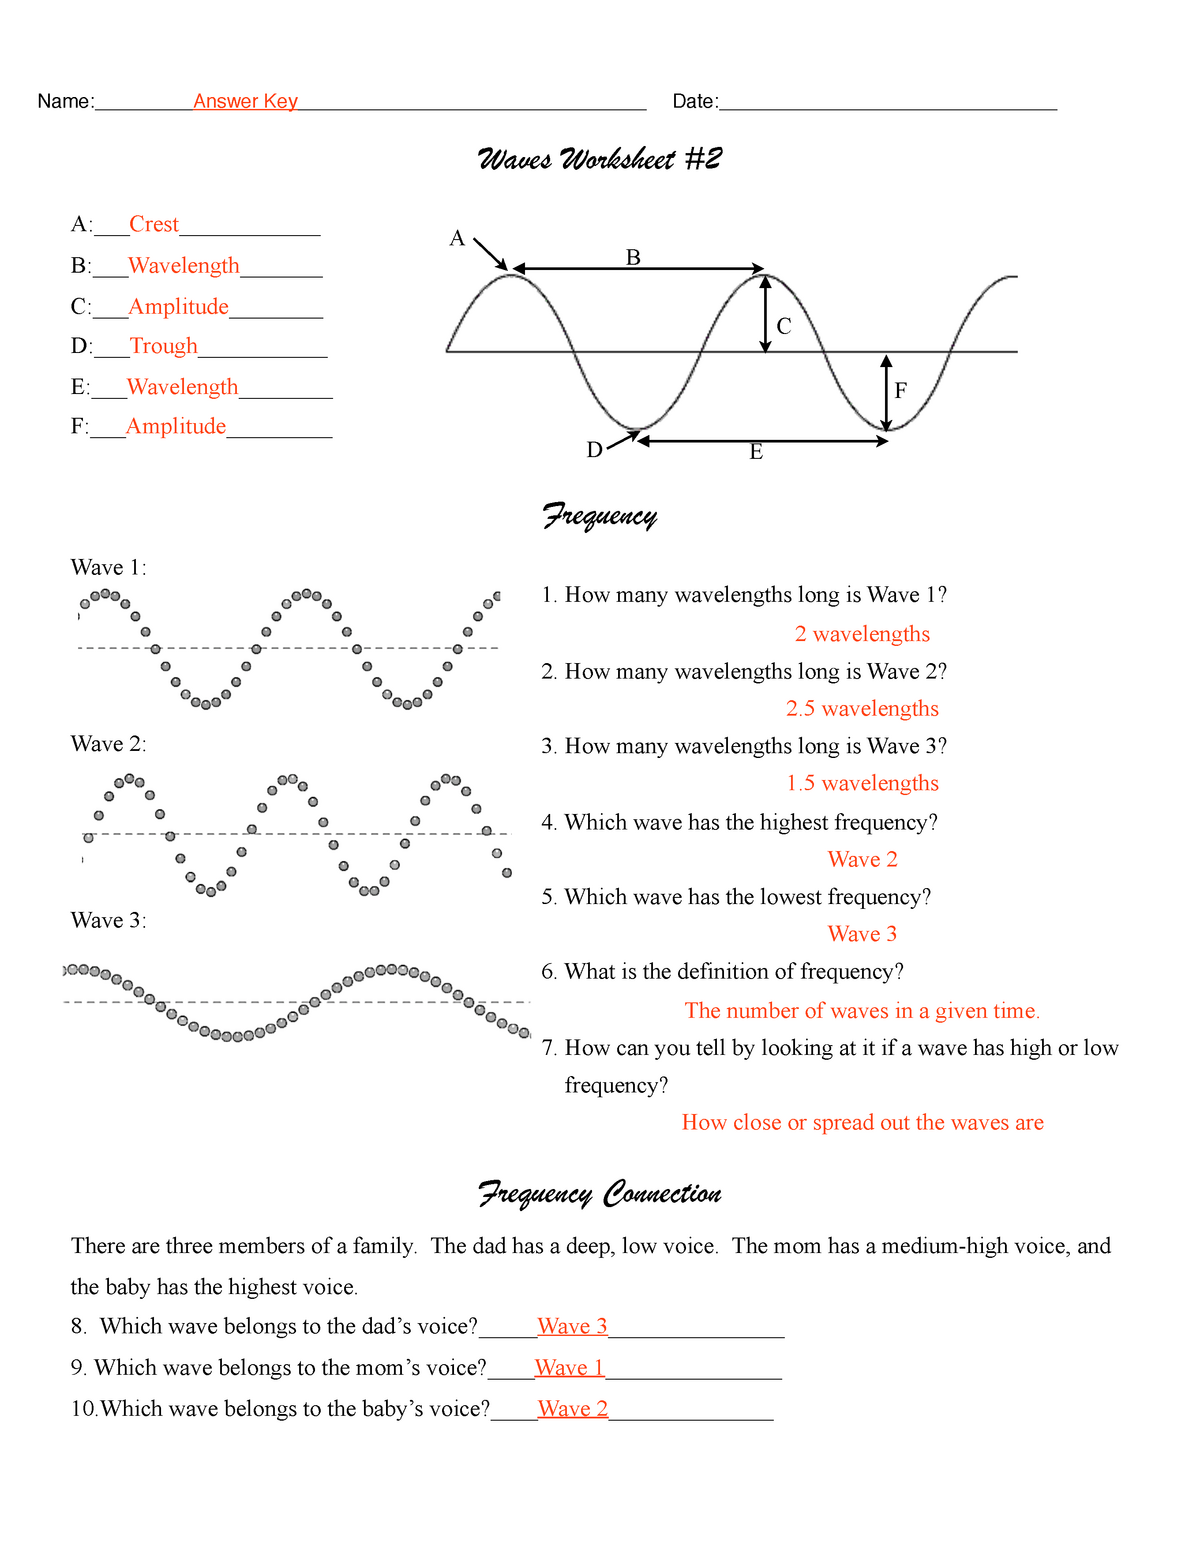 20 wave worksheet answer pdf - Waves Worksheet A Within Wave Worksheet Answer Key